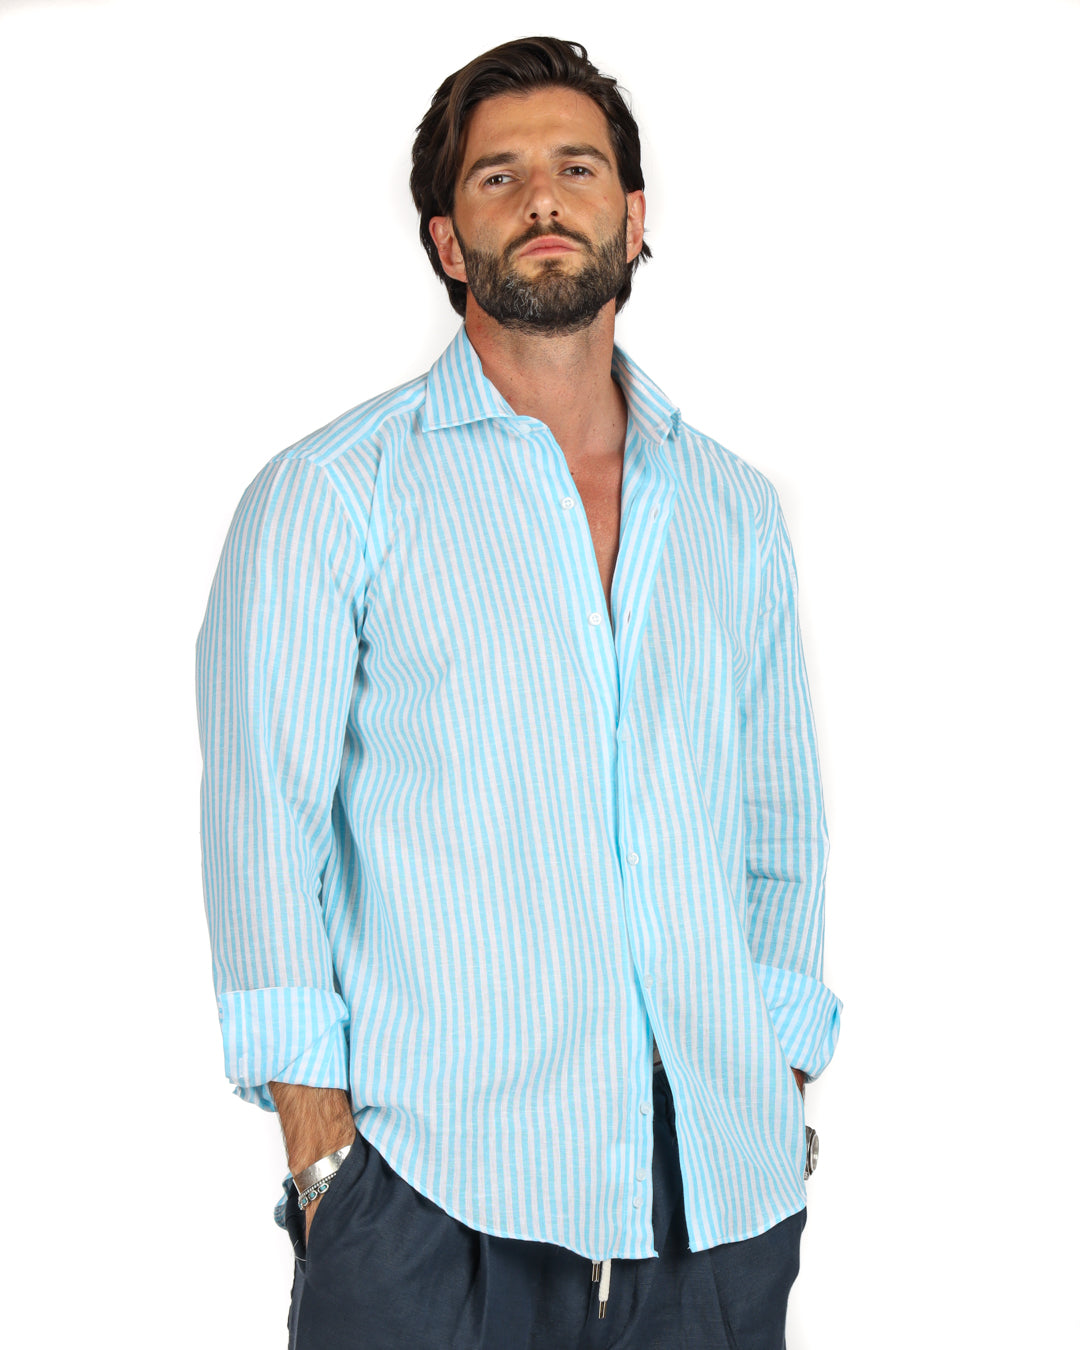 Ischia - Classic turquoise narrow striped linen shirt